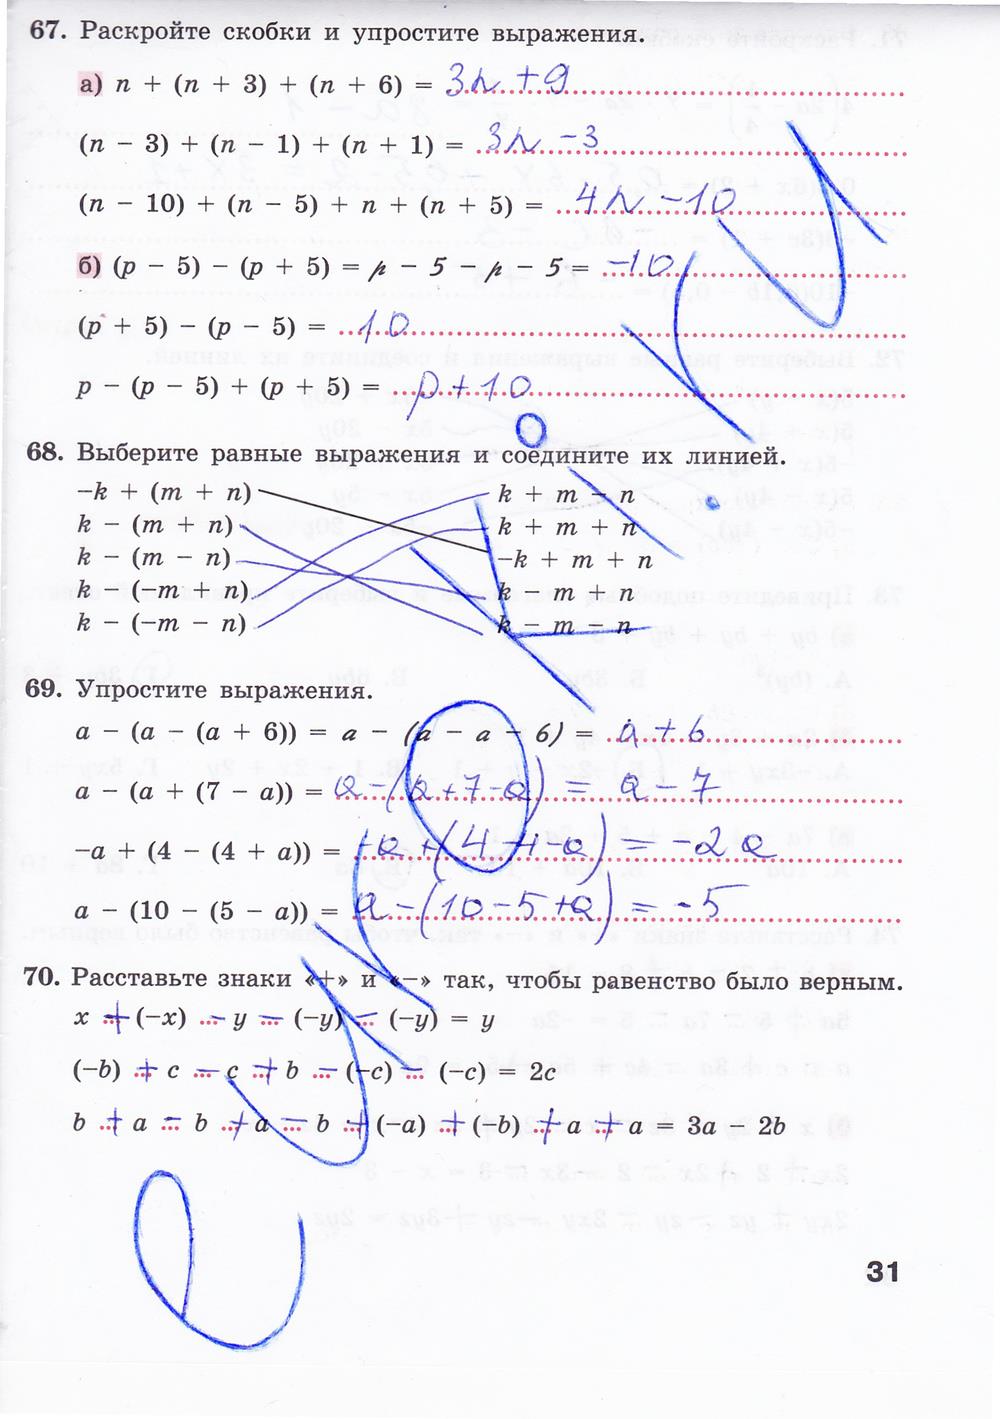 гдз 7 класс рабочая тетрадь страница 31 алгебра Минаева, Рослова